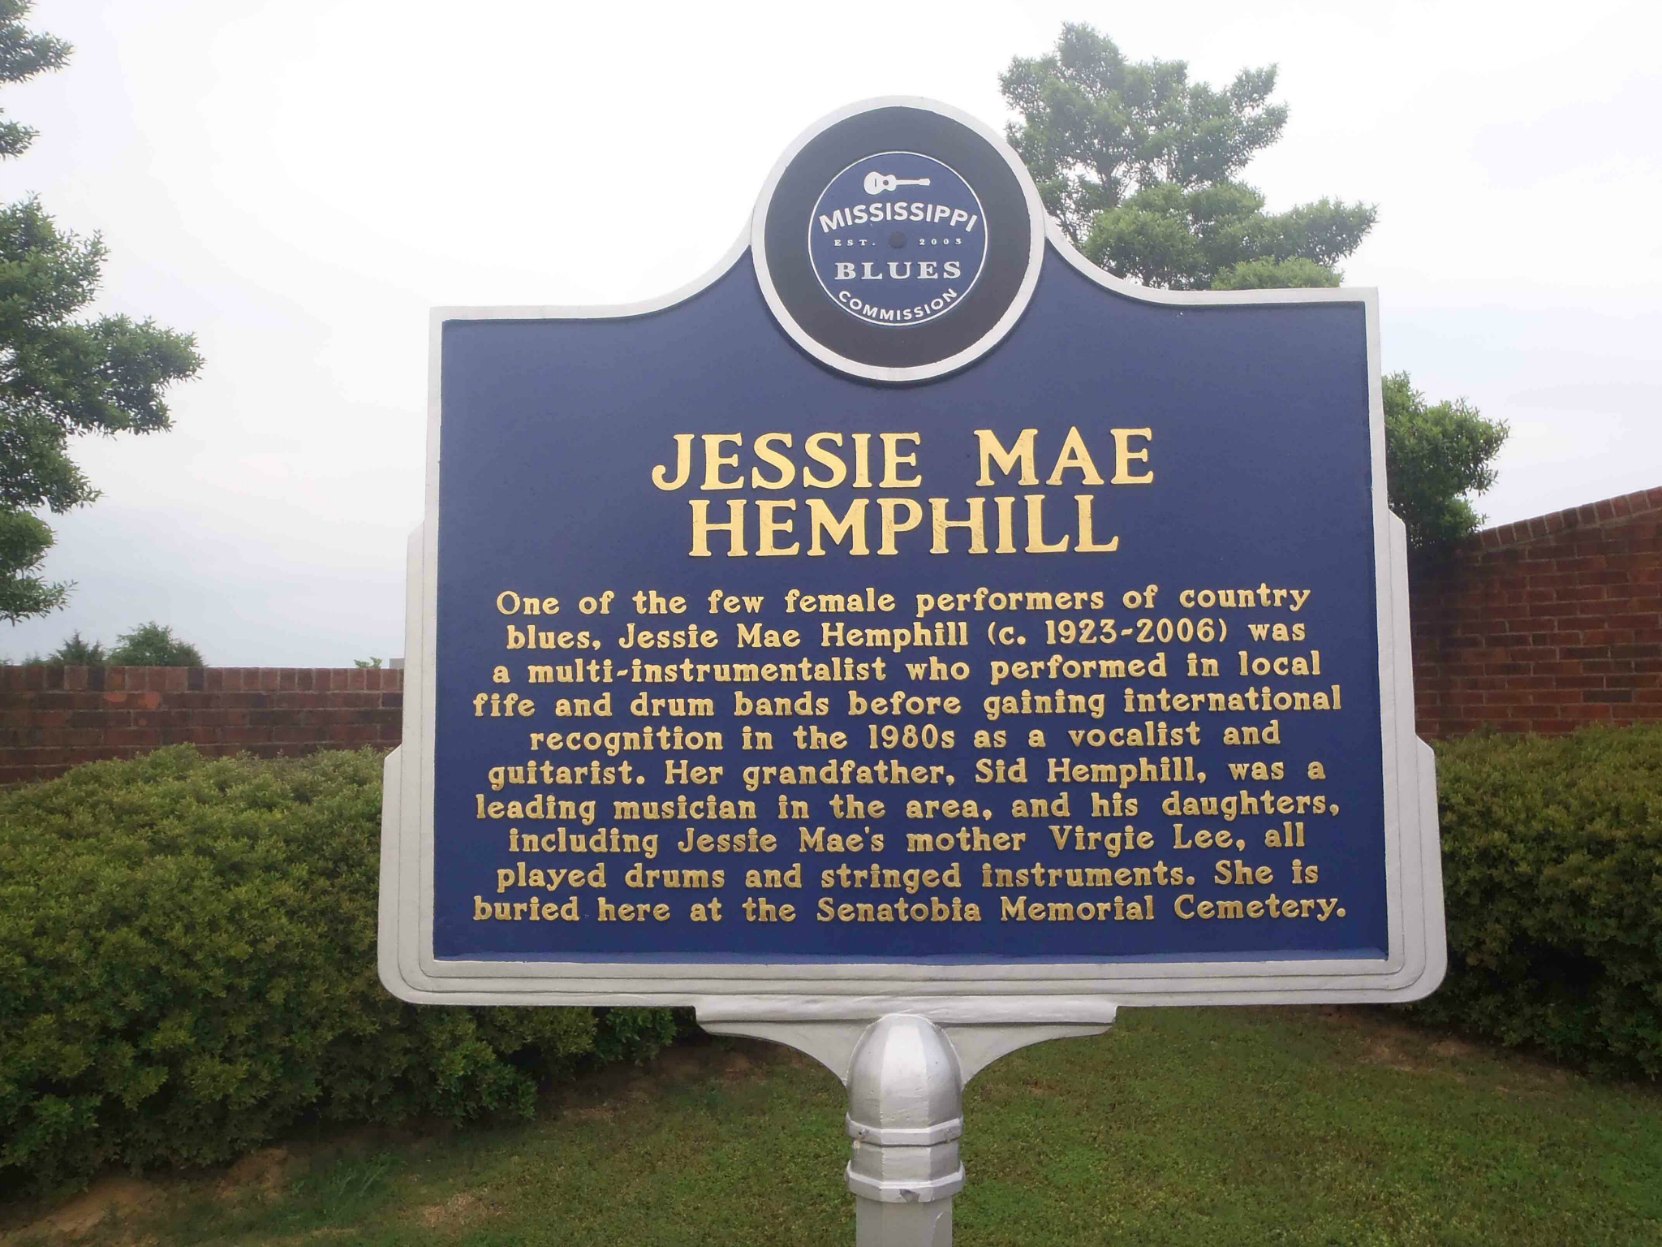 Mississippi Blues Trail marker for Jessie Mae Hemphill at the entrance to Senatobia Memorial Cemetery, Senatobia, Mississippi.